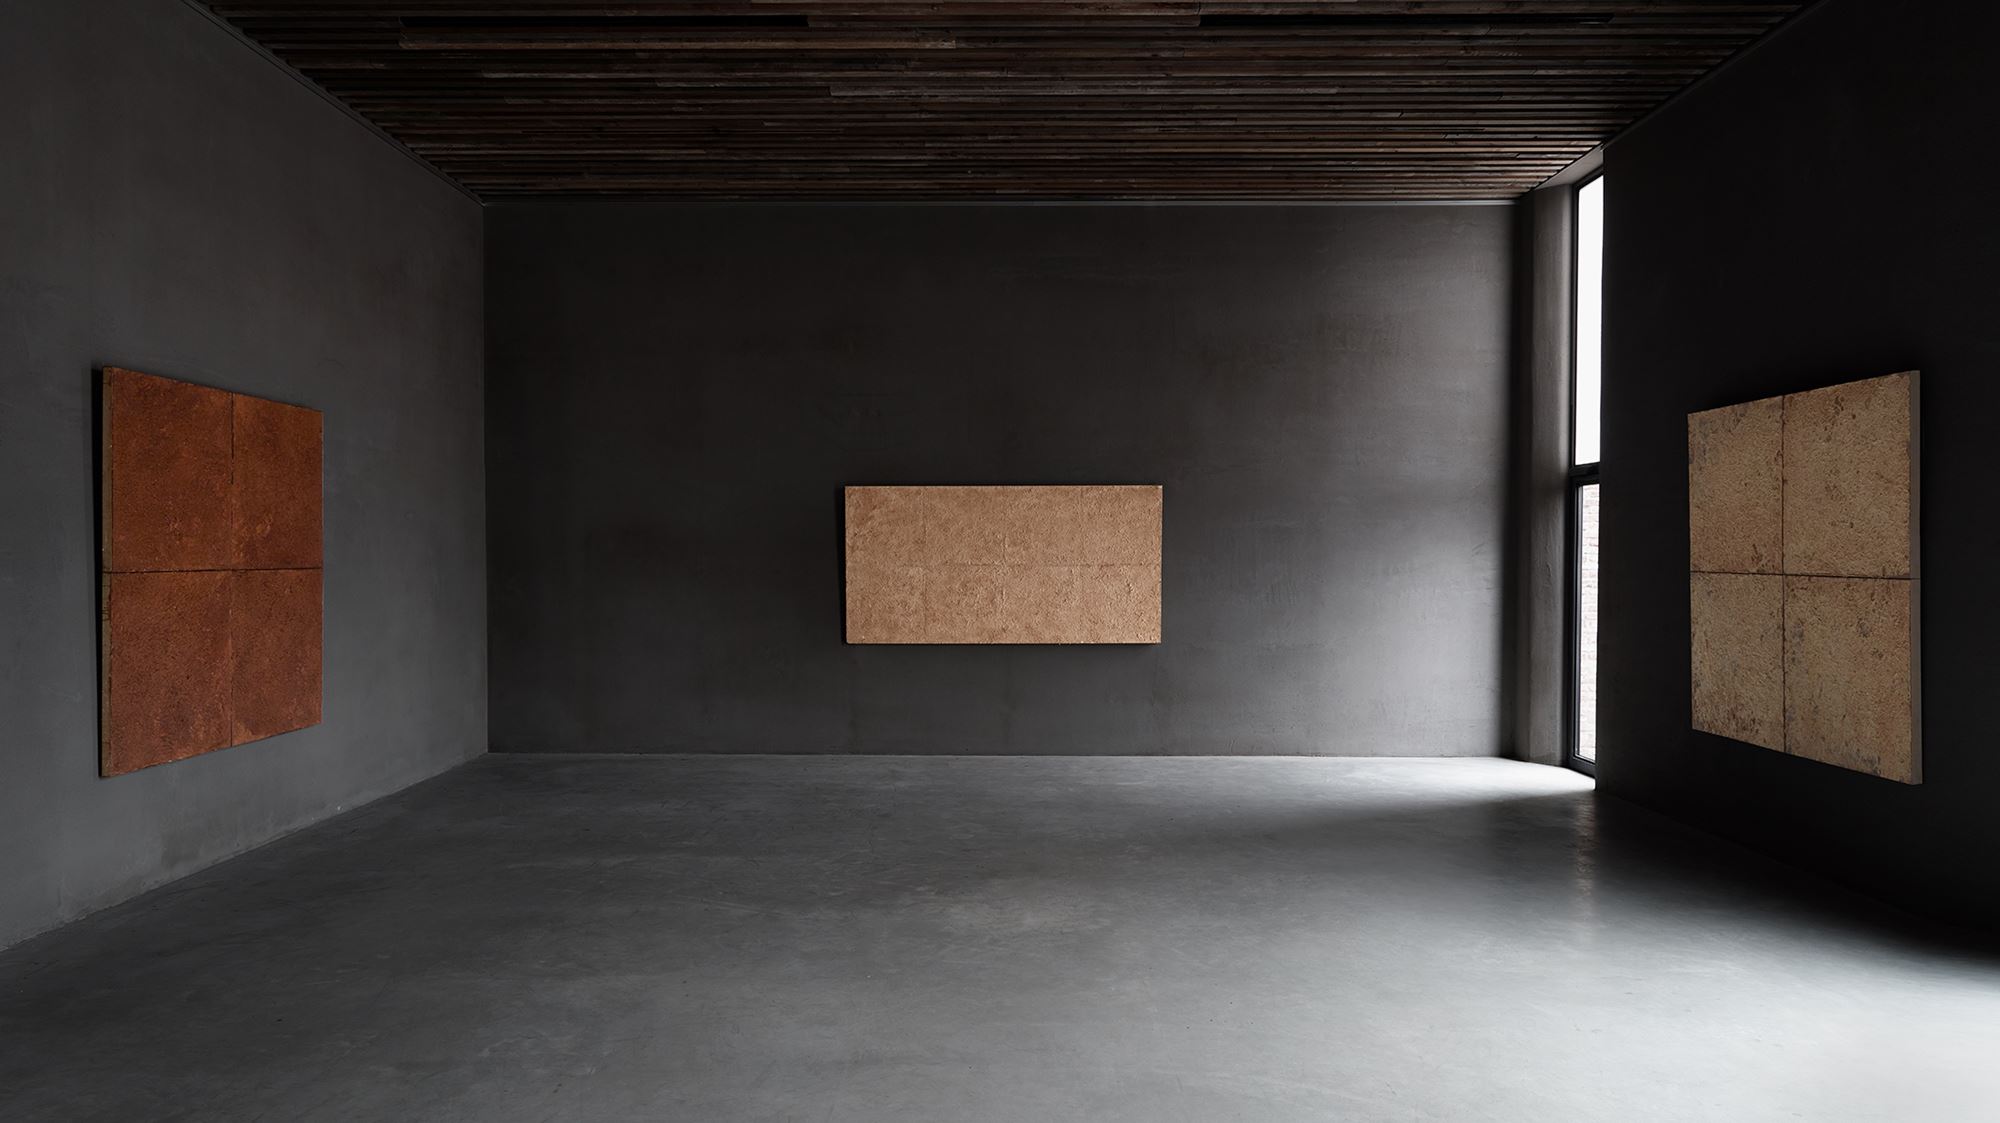 Chung Chang-Sup, 'Return' at Axel Vervoordt Gallery, Antwerp 